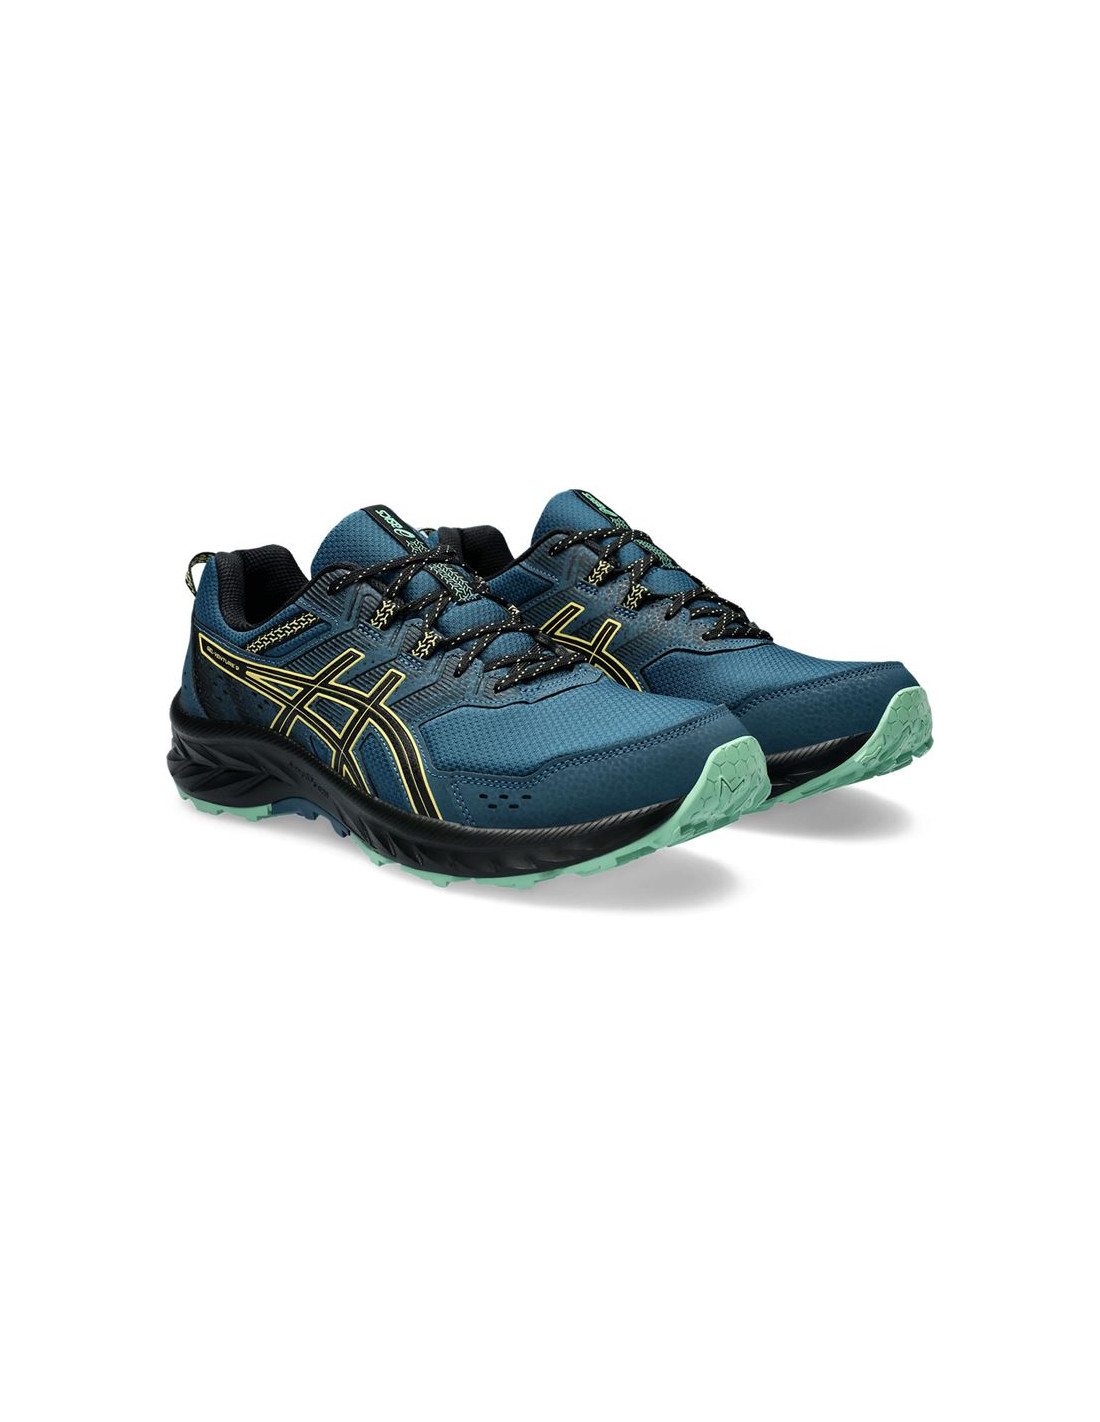 Zapatillas de Running ASICS Gel-Venture 9 Hombre Magnetic Azul/Negro